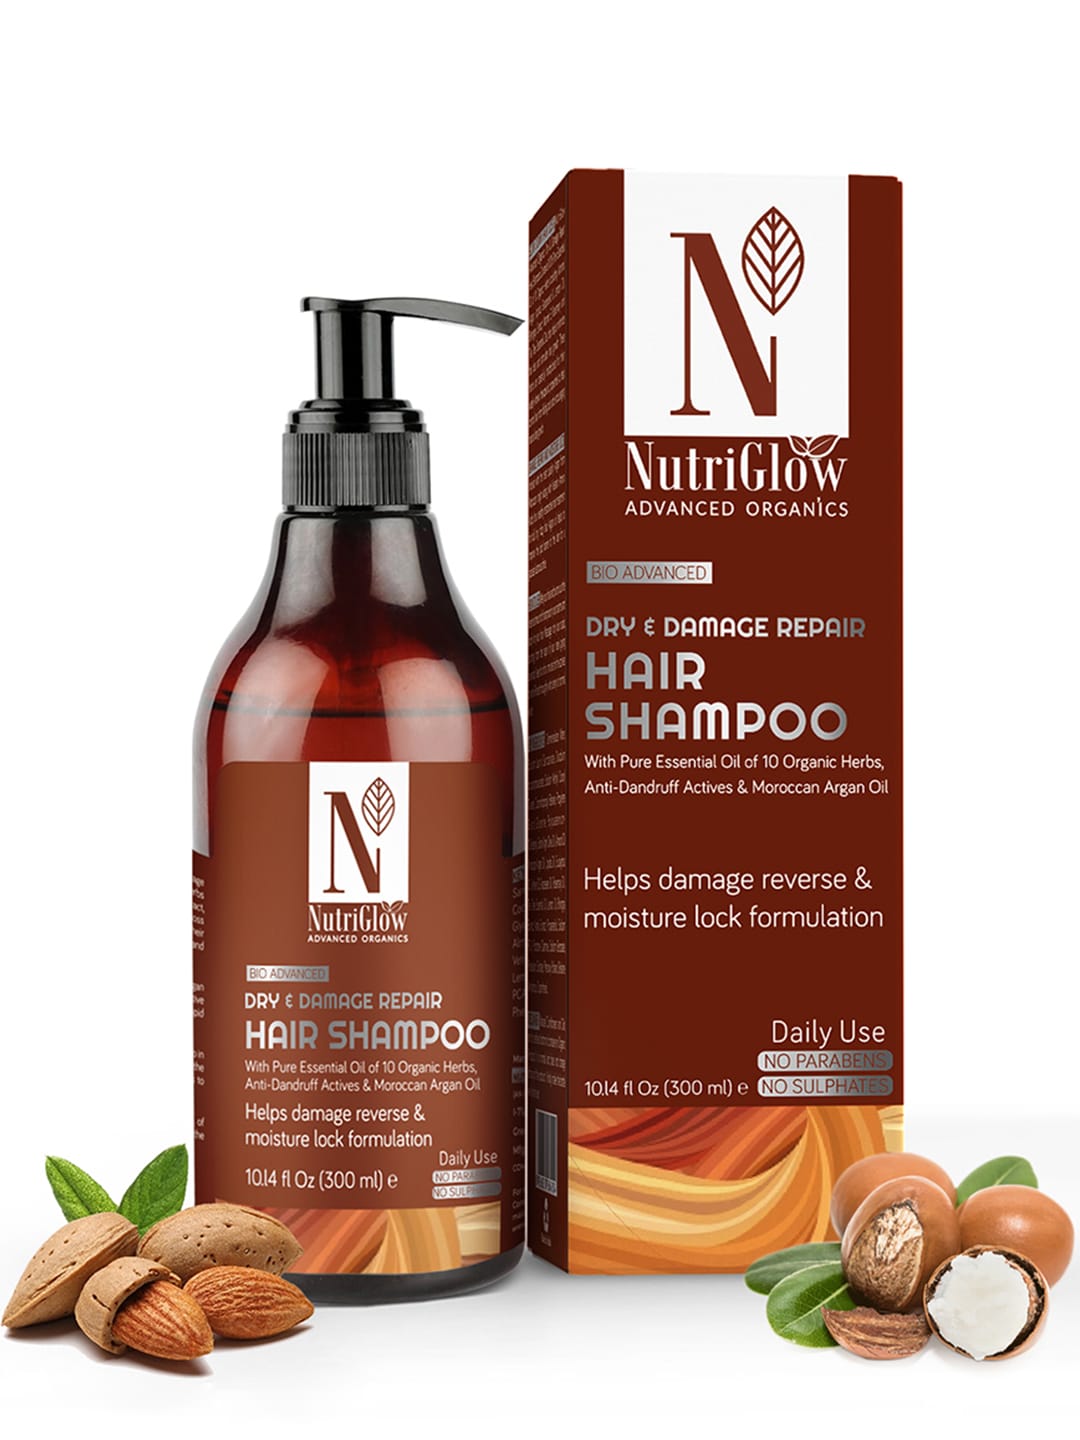 Nutriglow Advanced Organics Bio Advanced Dry & Damage Repair Hair Shampoo 300 ml Price in India